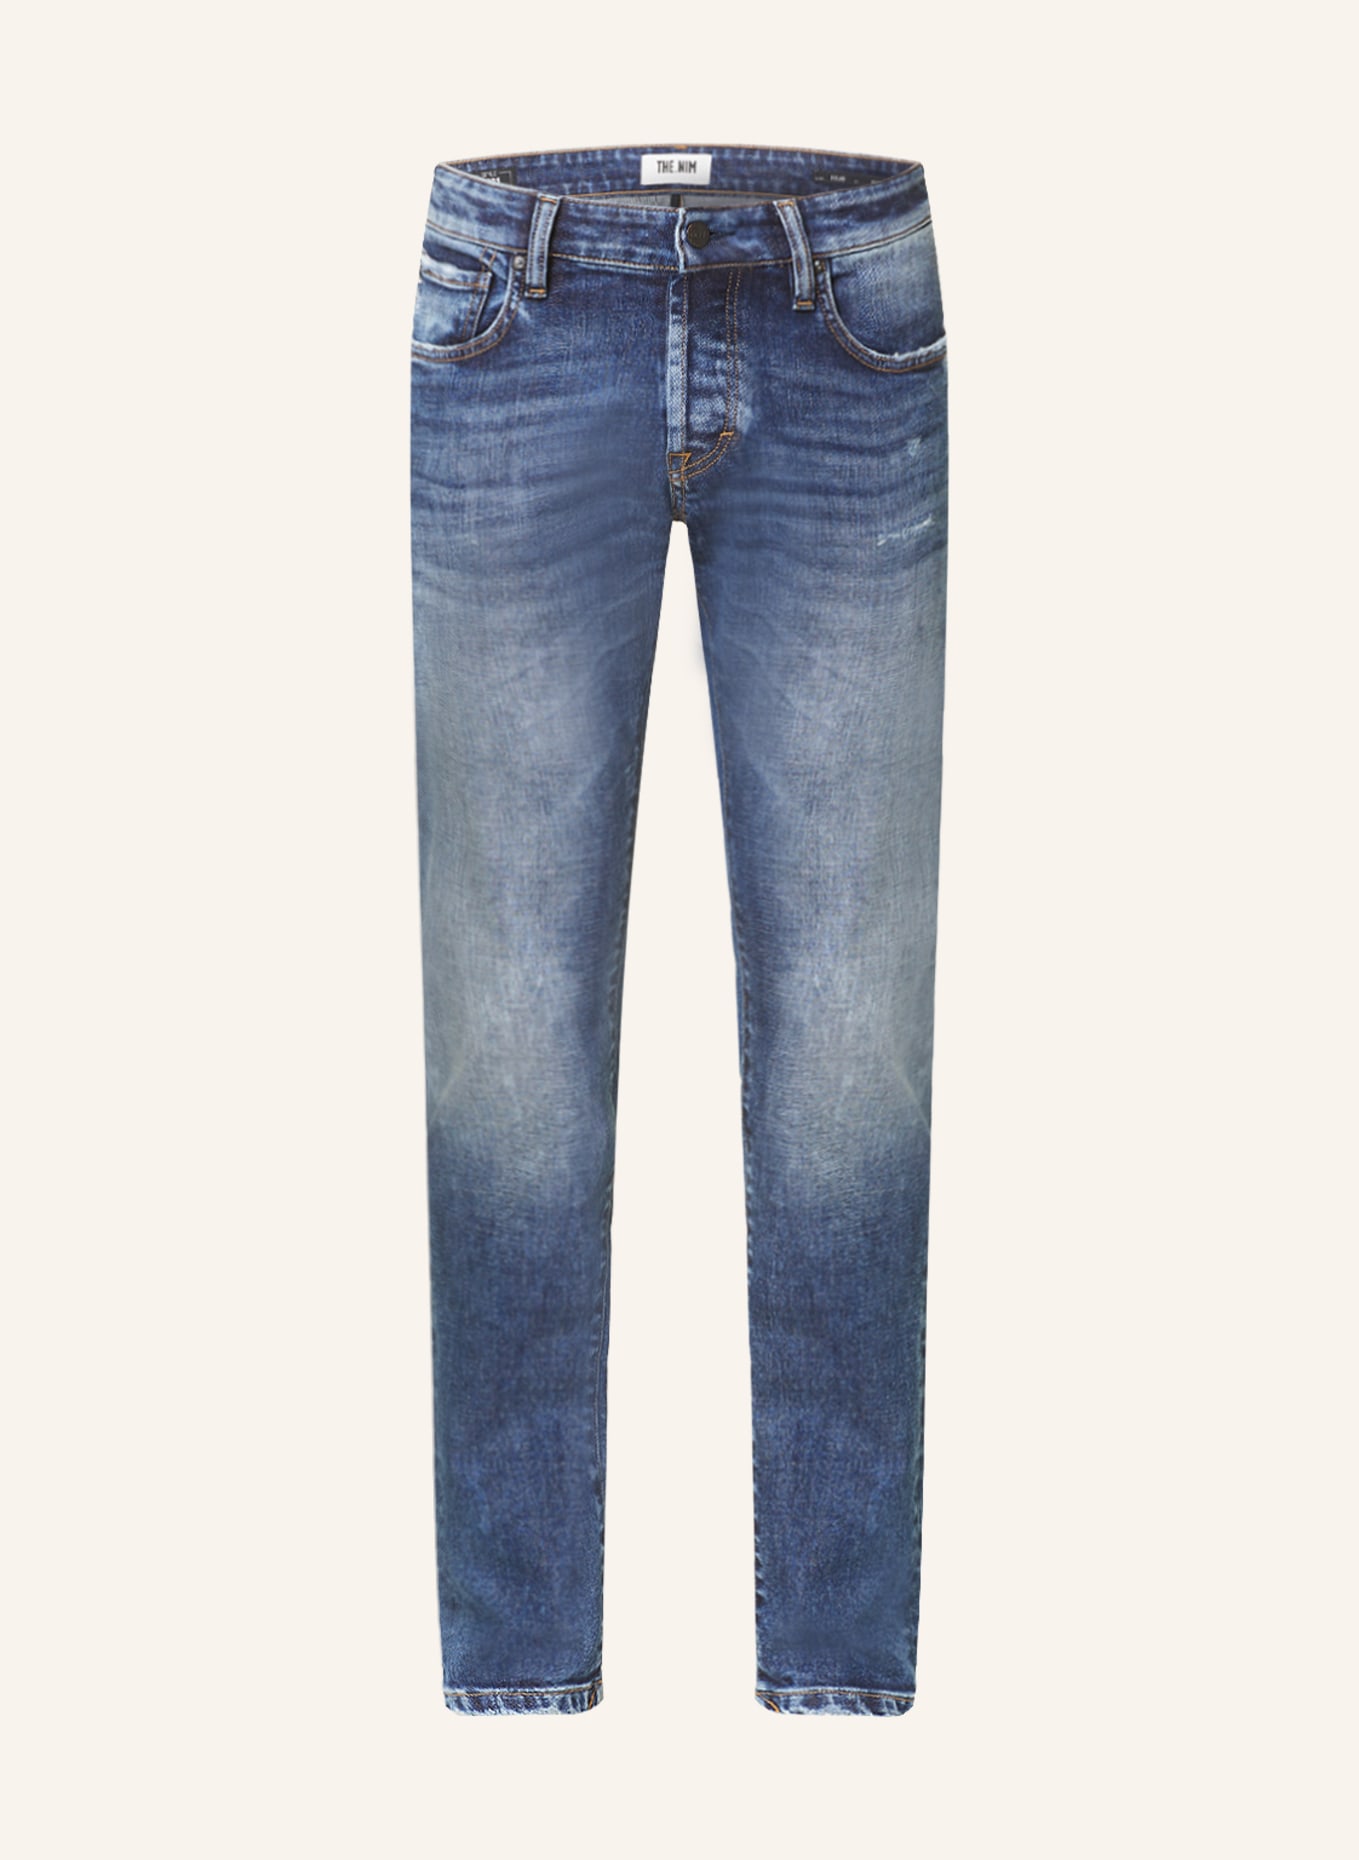 THE.NIM STANDARD Jeans DYLAN Slim Fit, Farbe: W757-MDR MEDIUM REPAIRED (Bild 1)